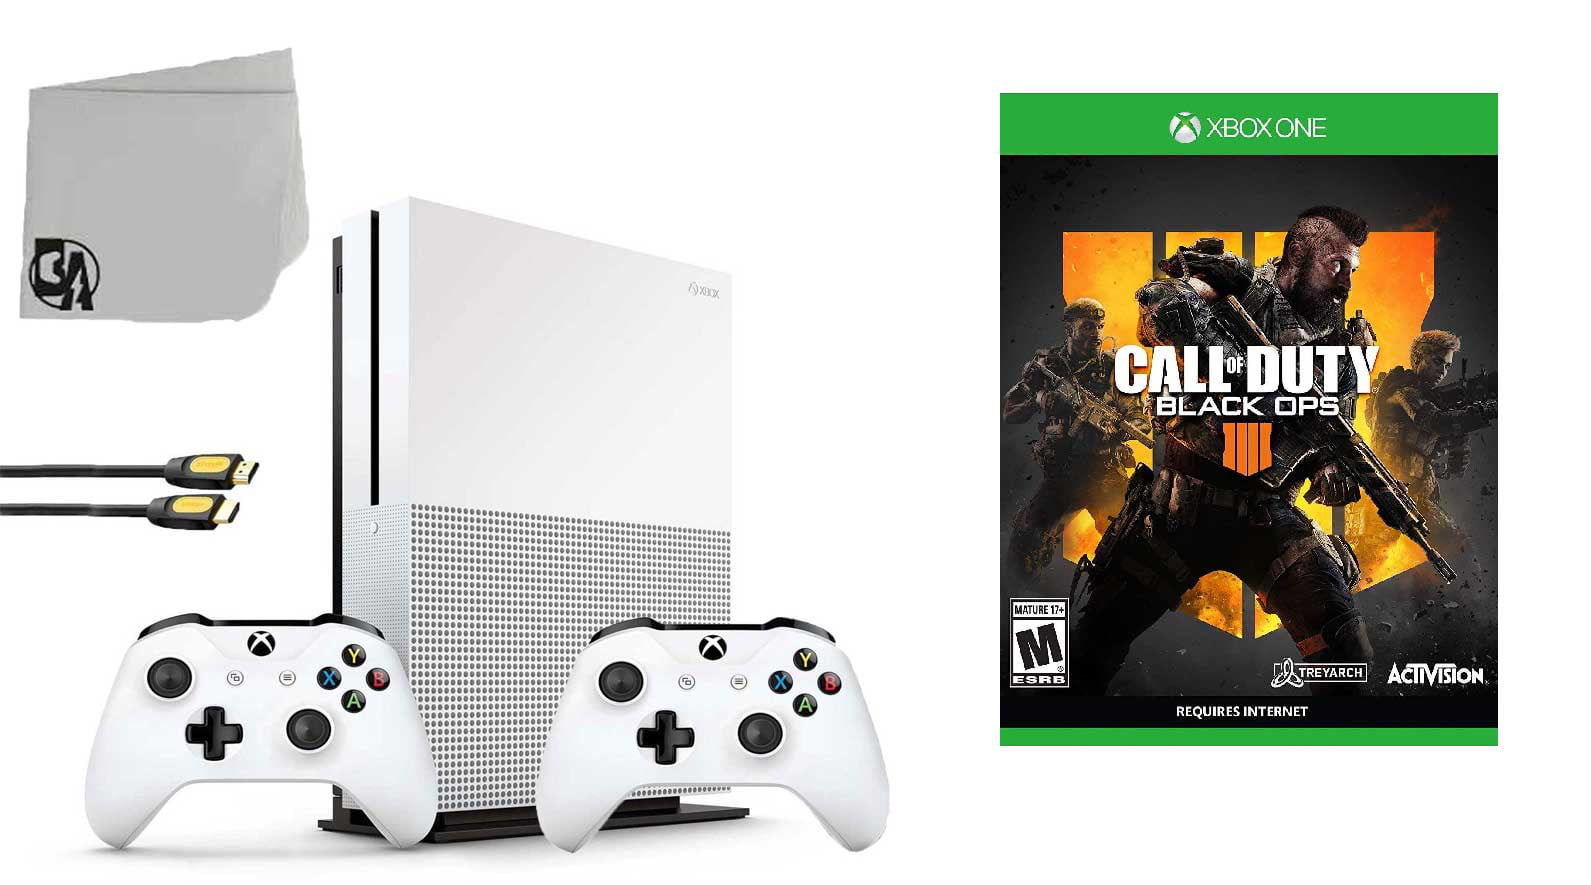 NEW Microsoft Xbox One S 500GB Home Video Game Console - White ZQ9-00001  889842257113